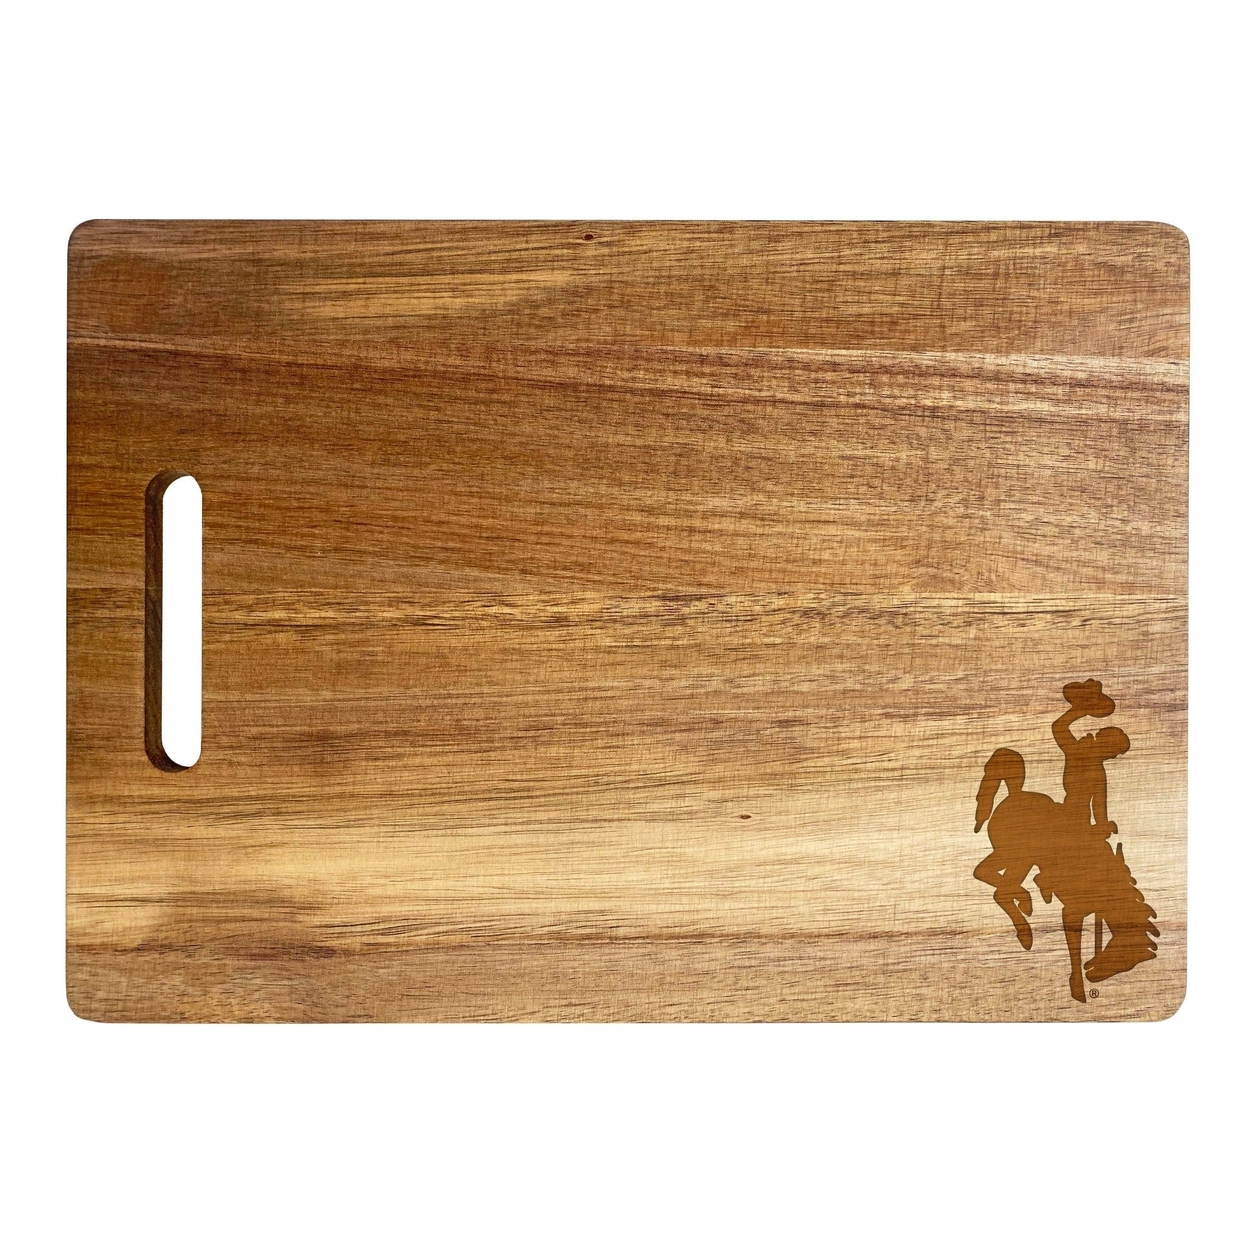 Wyoming Cowboys Engraved Wooden Cutting Board 10 X 14 Acacia Wood - Small Engraving